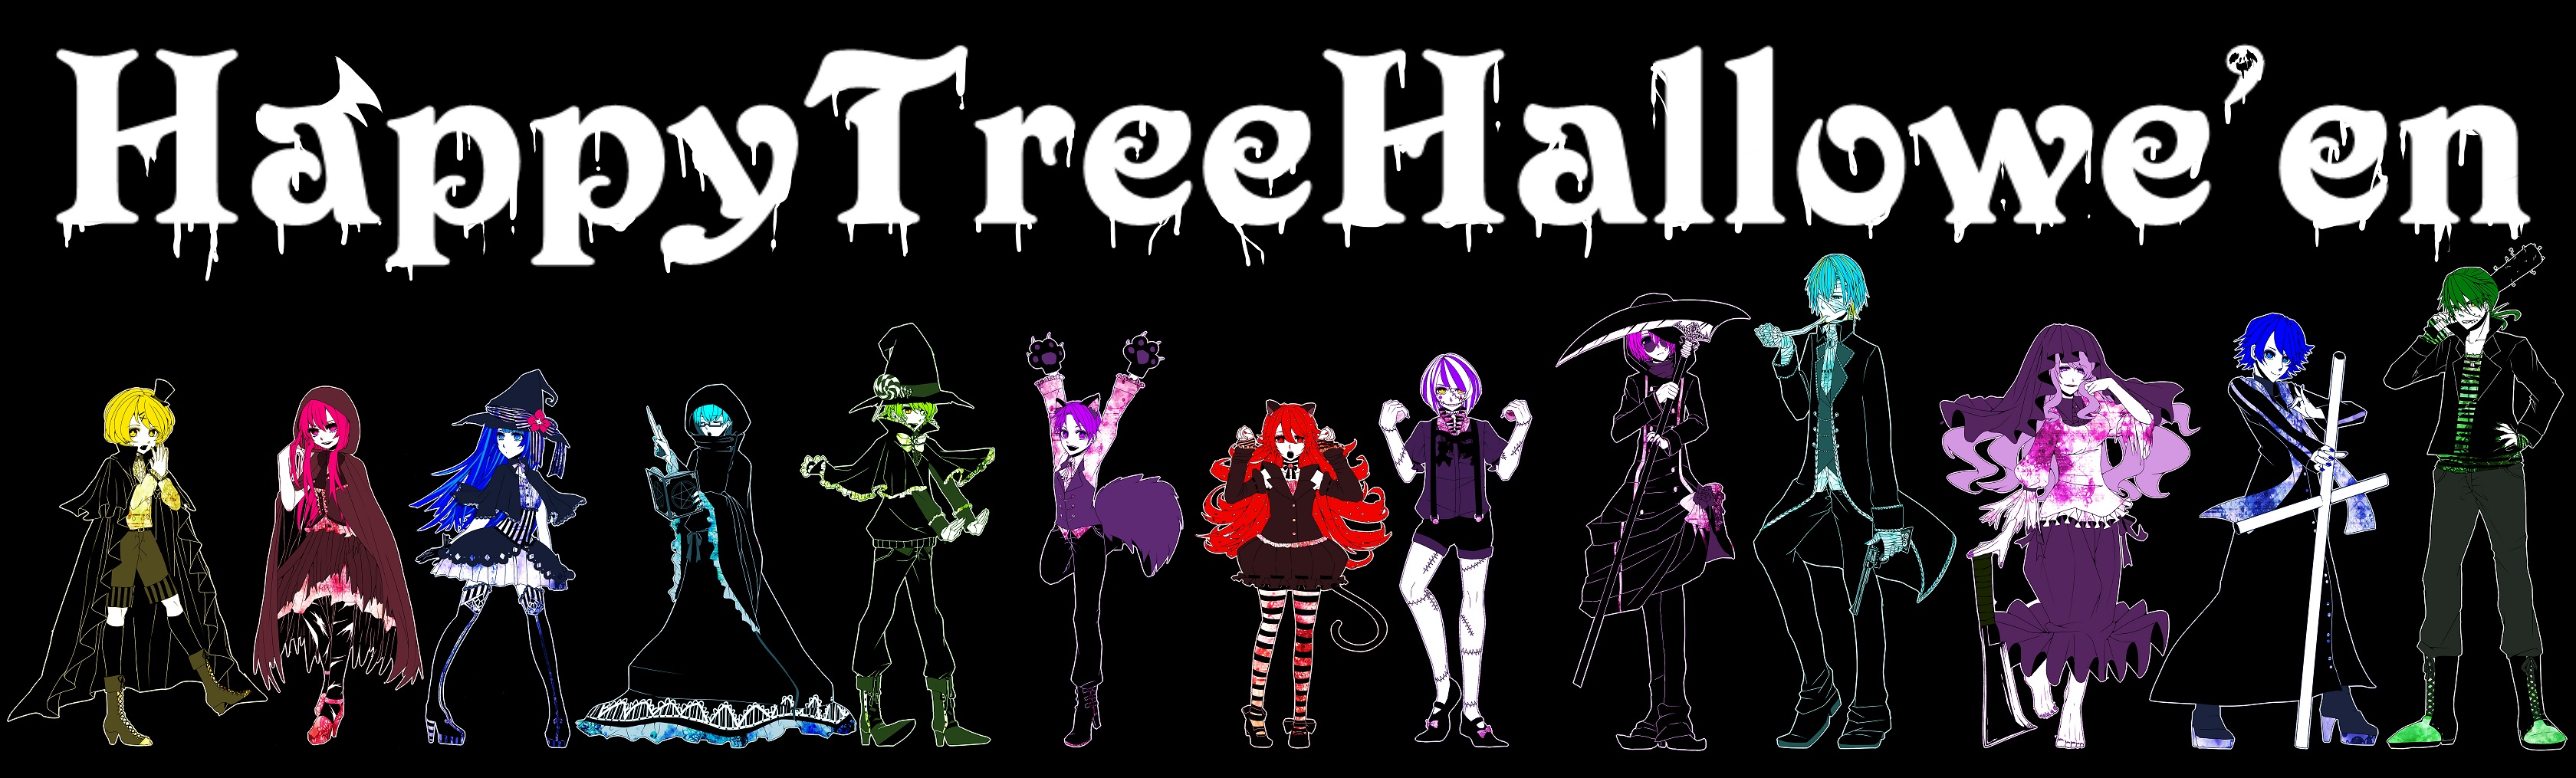 happy, Tree, Friends, Halloween Wallpaper